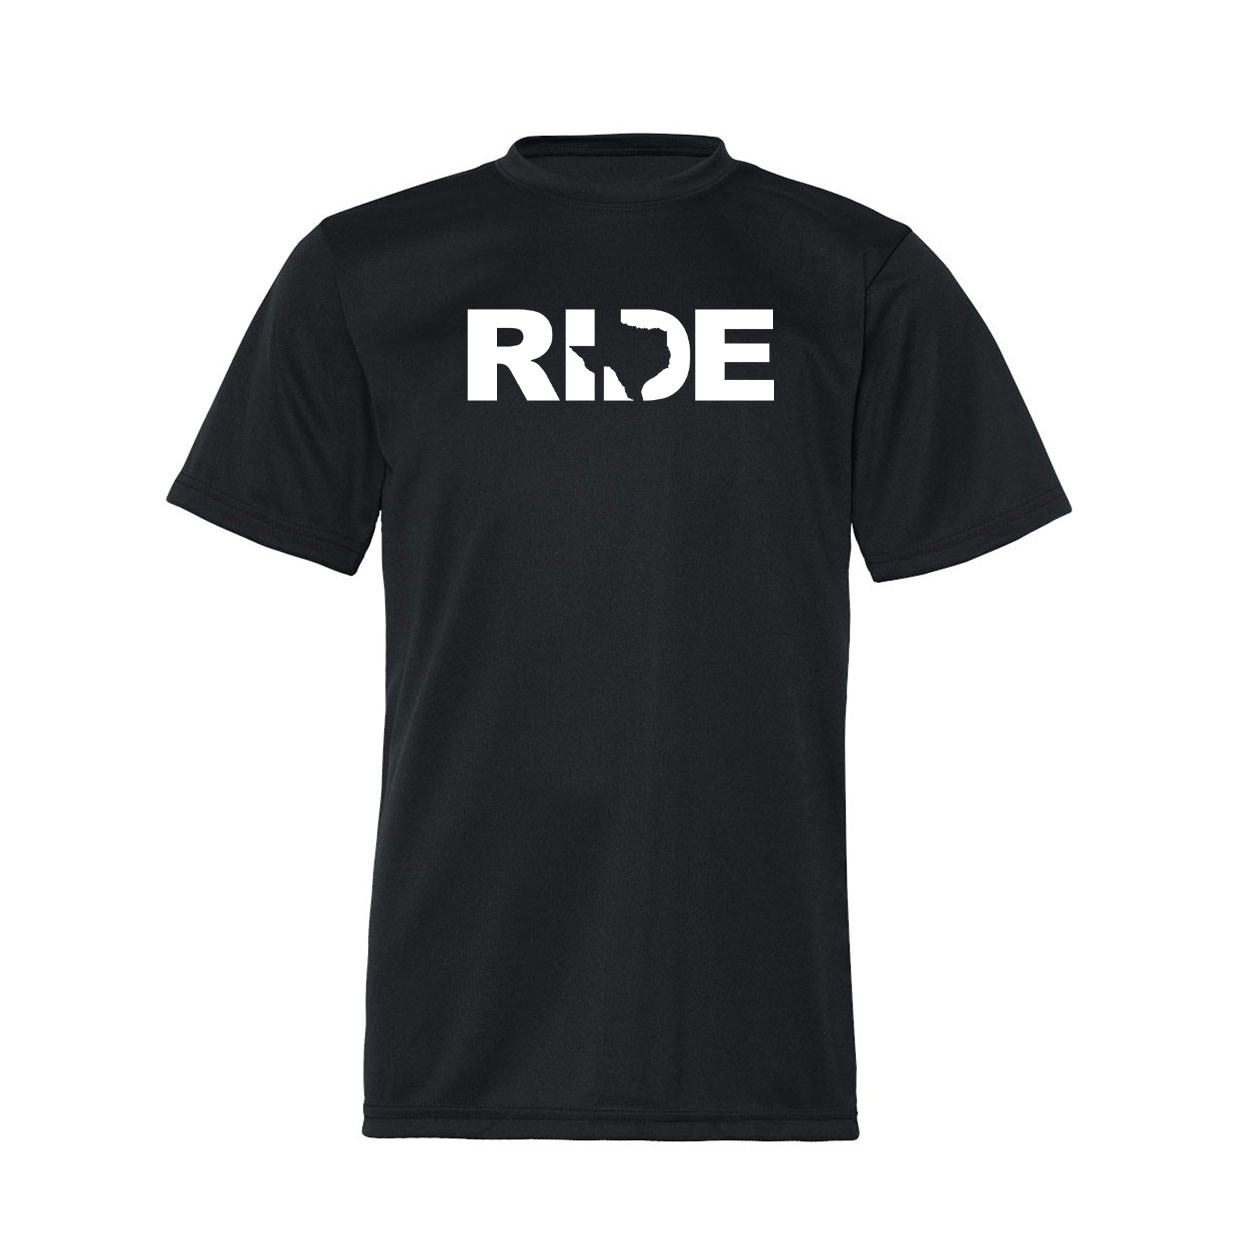 Ride Texas Classic Youth Unisex Performance T-Shirt Black (White Logo)